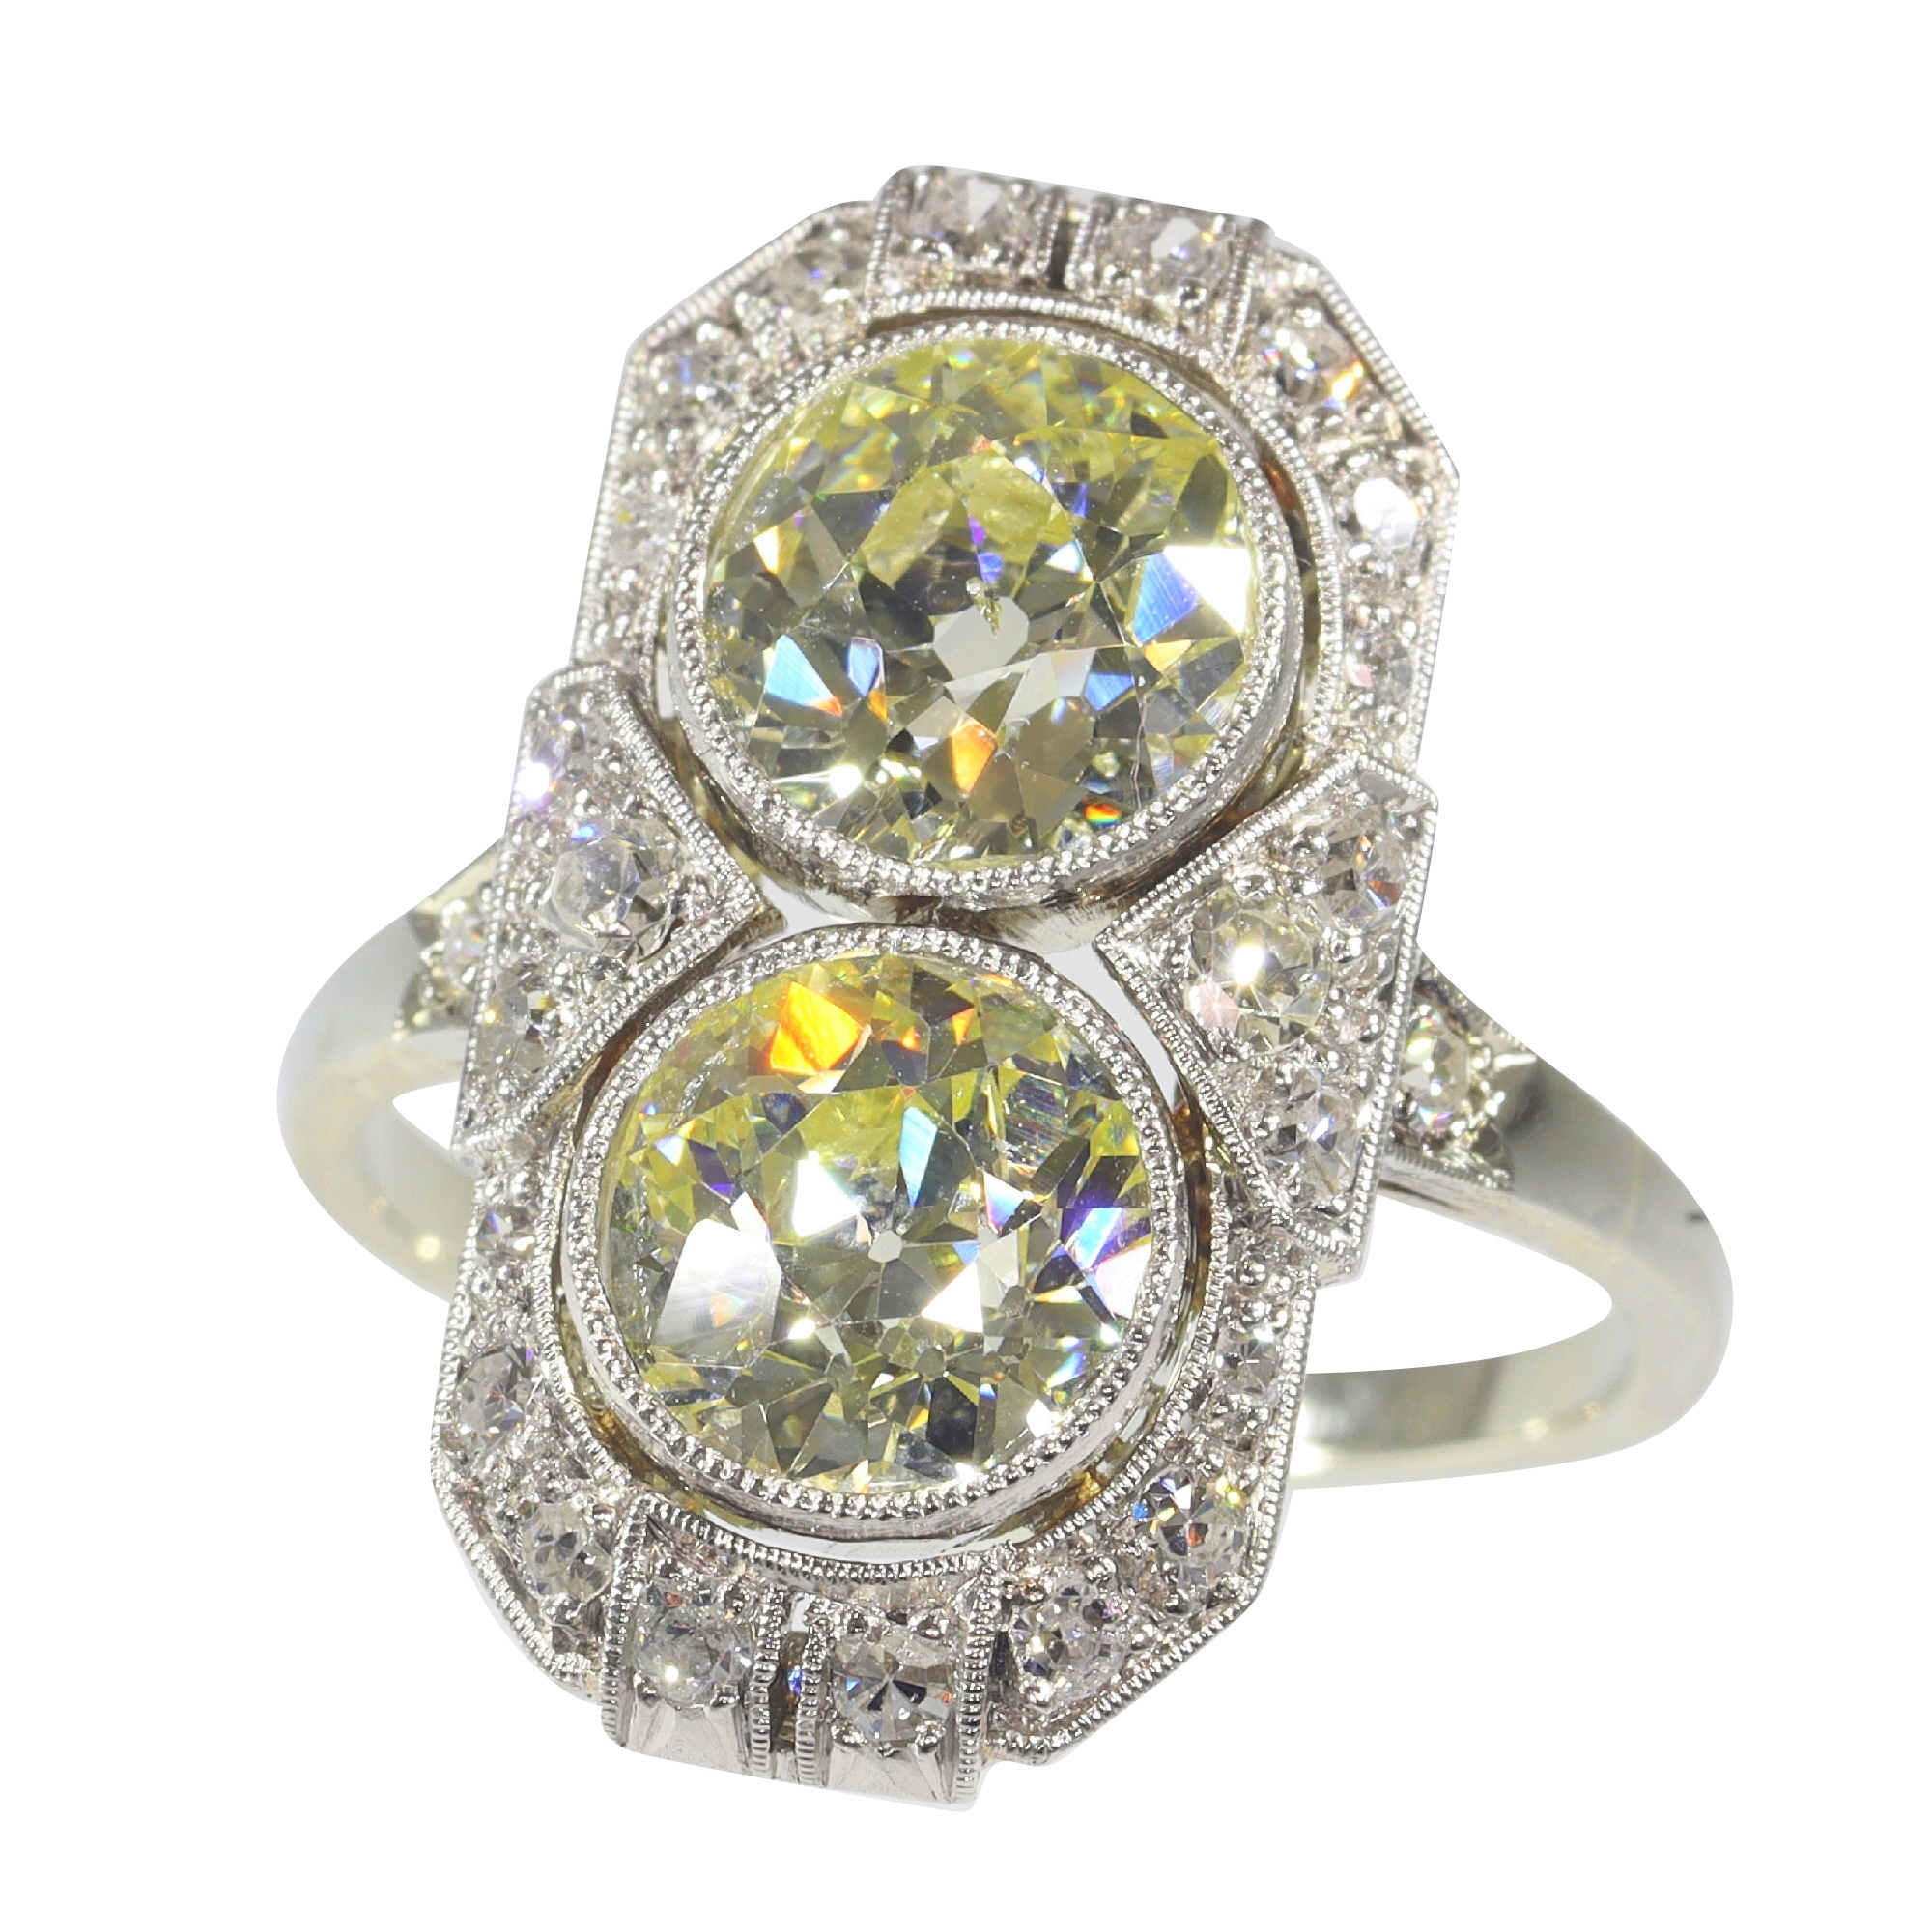 Art Deco Elegance: A 1930s Diamond Ring's Tale